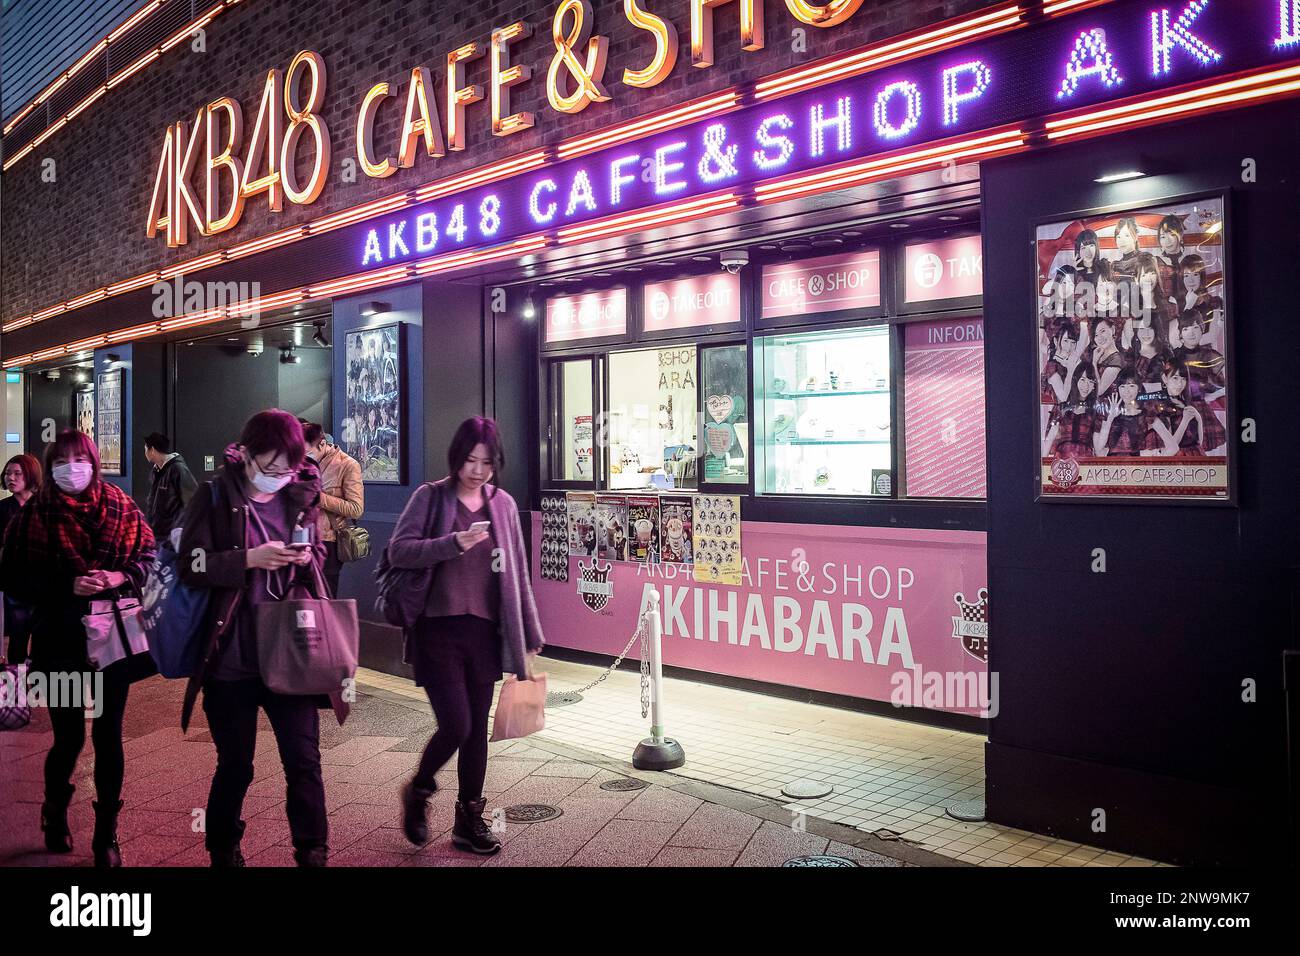 AKB48 Cafe & Shop in Akihabara, Tokyo, Japan Stock Photo